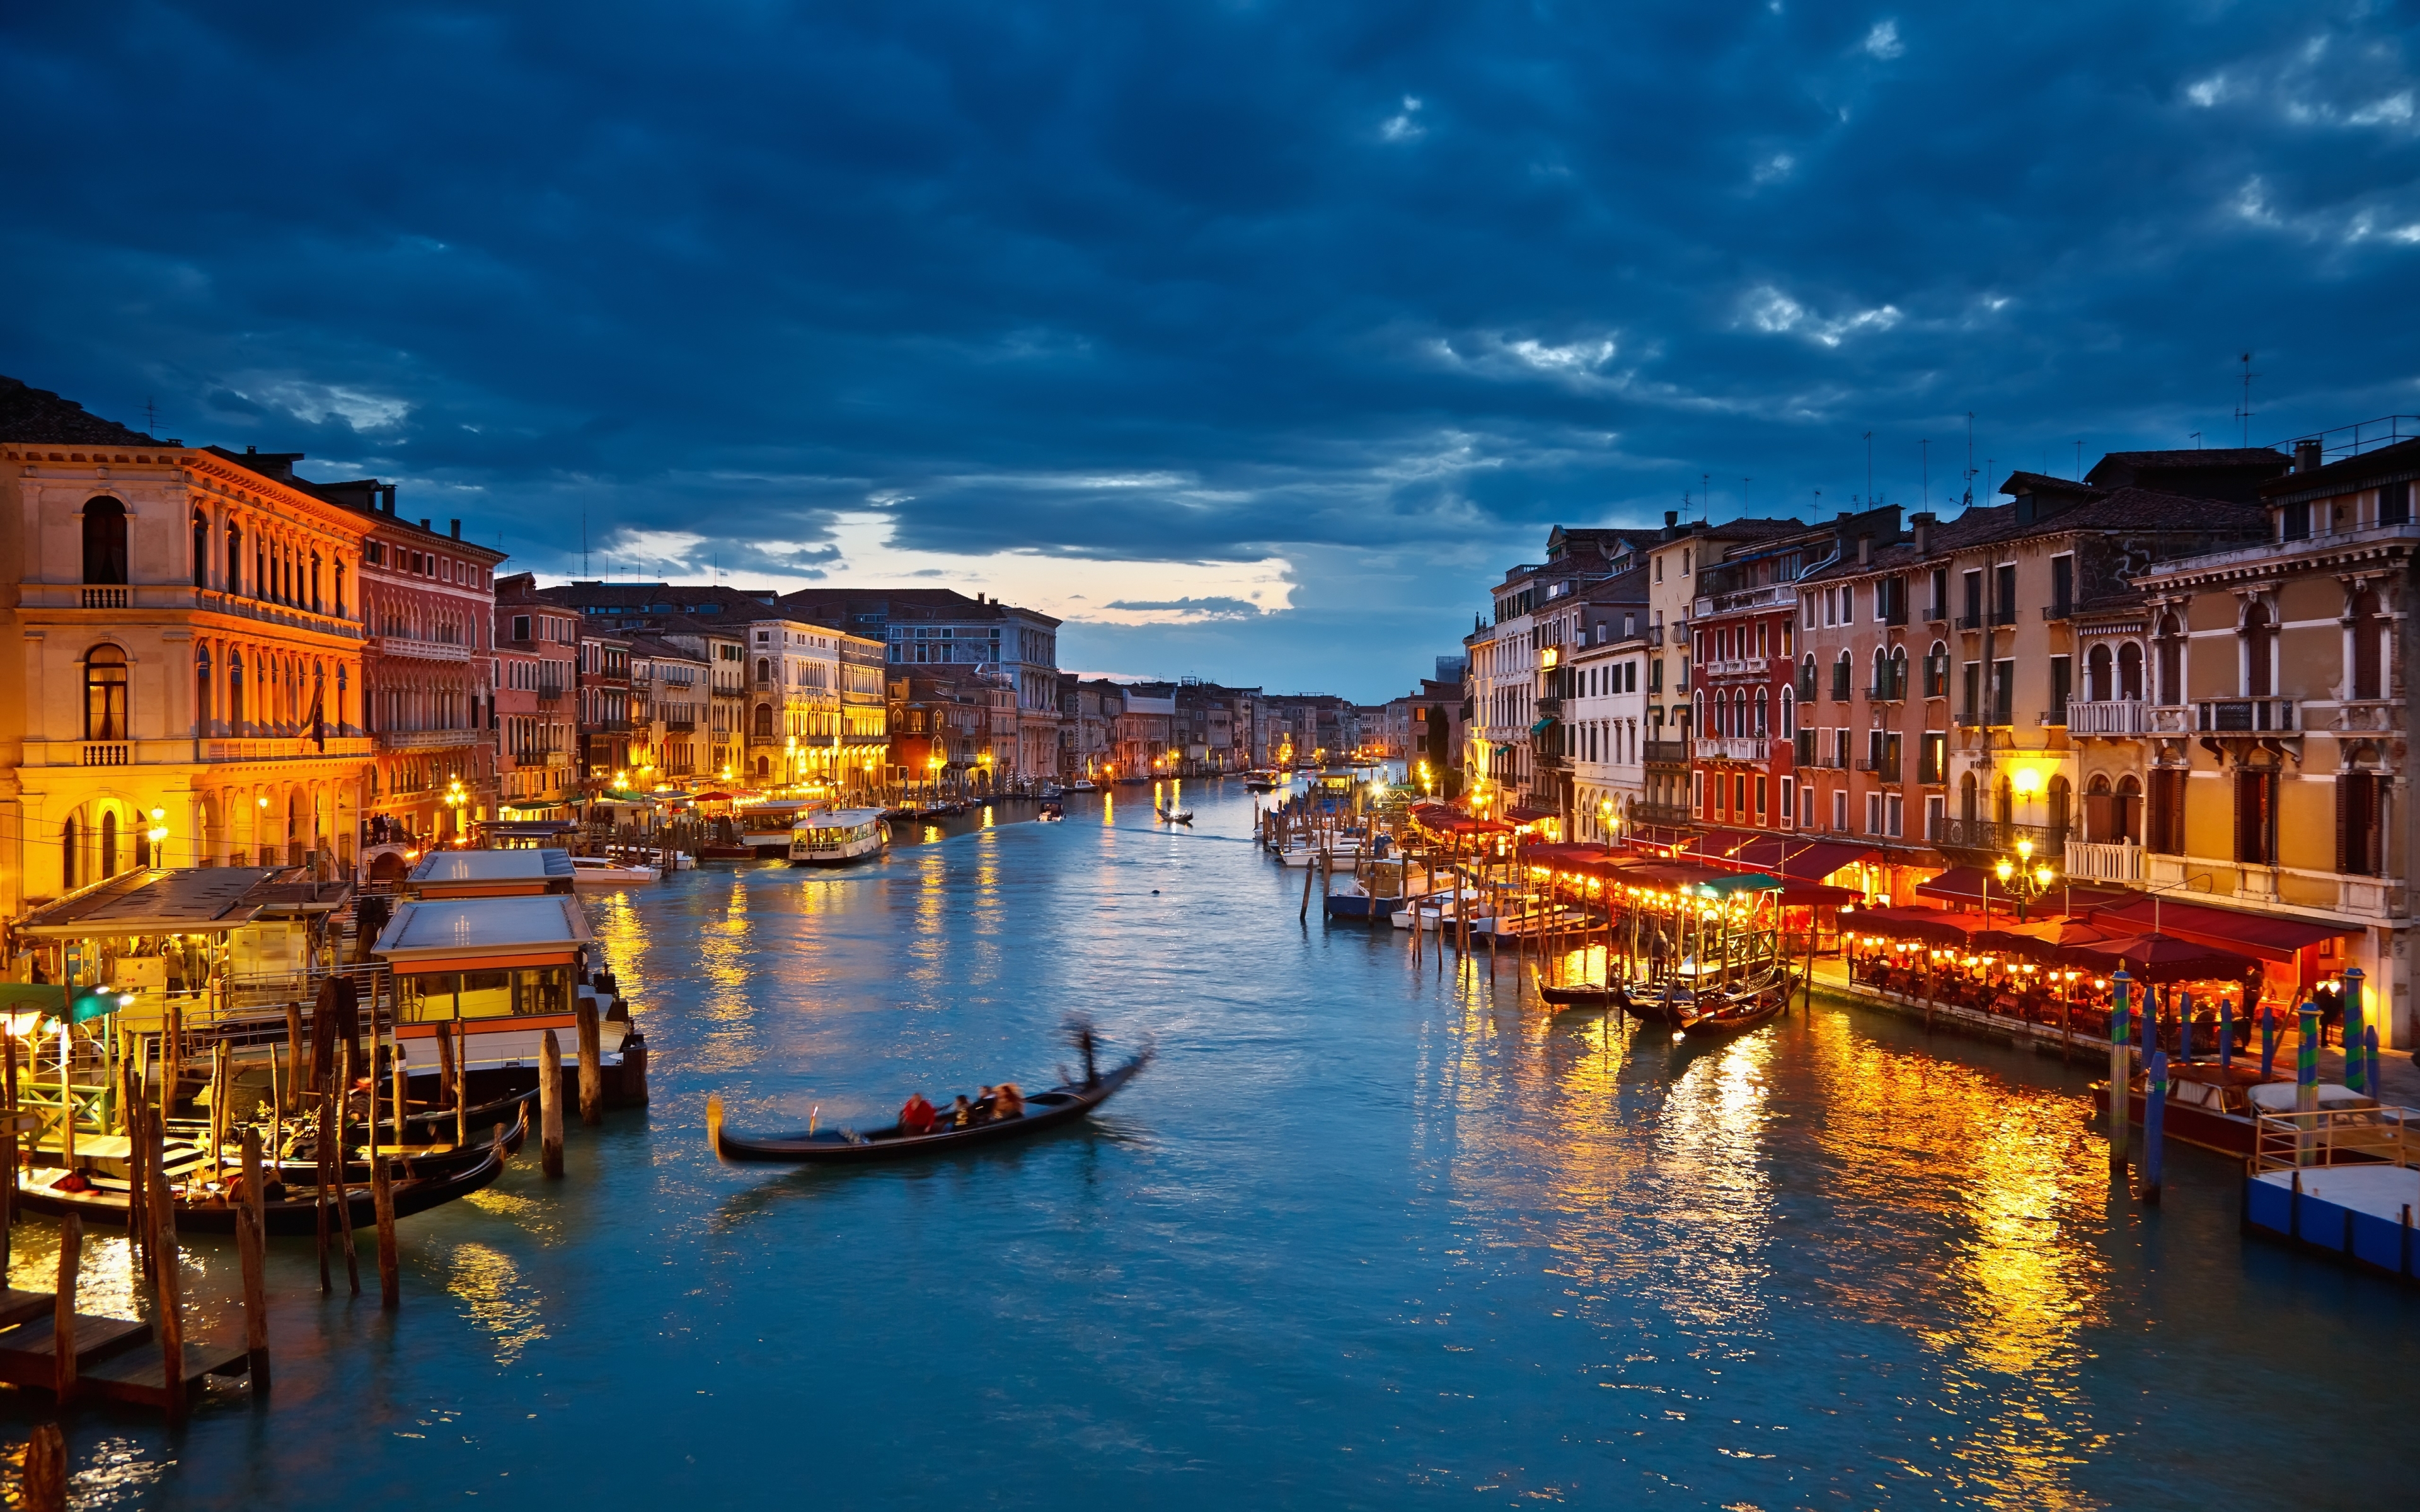 Venice Italy for 3840 x 2400 4K Retina Display resolution